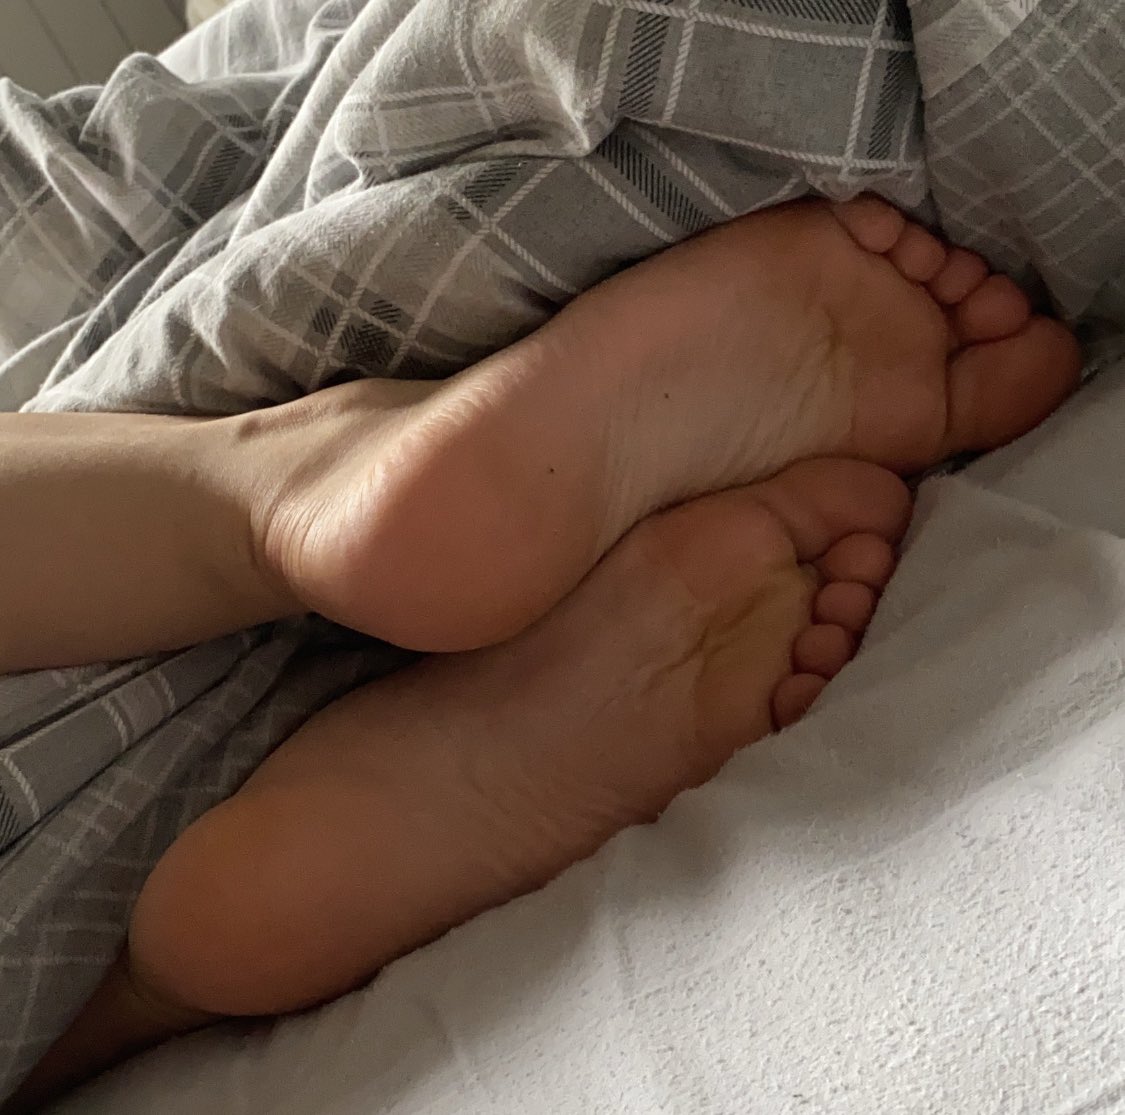 Sexy Small Feet Porn - Tiny feet (@tinyfeetgoddess) / Twitter